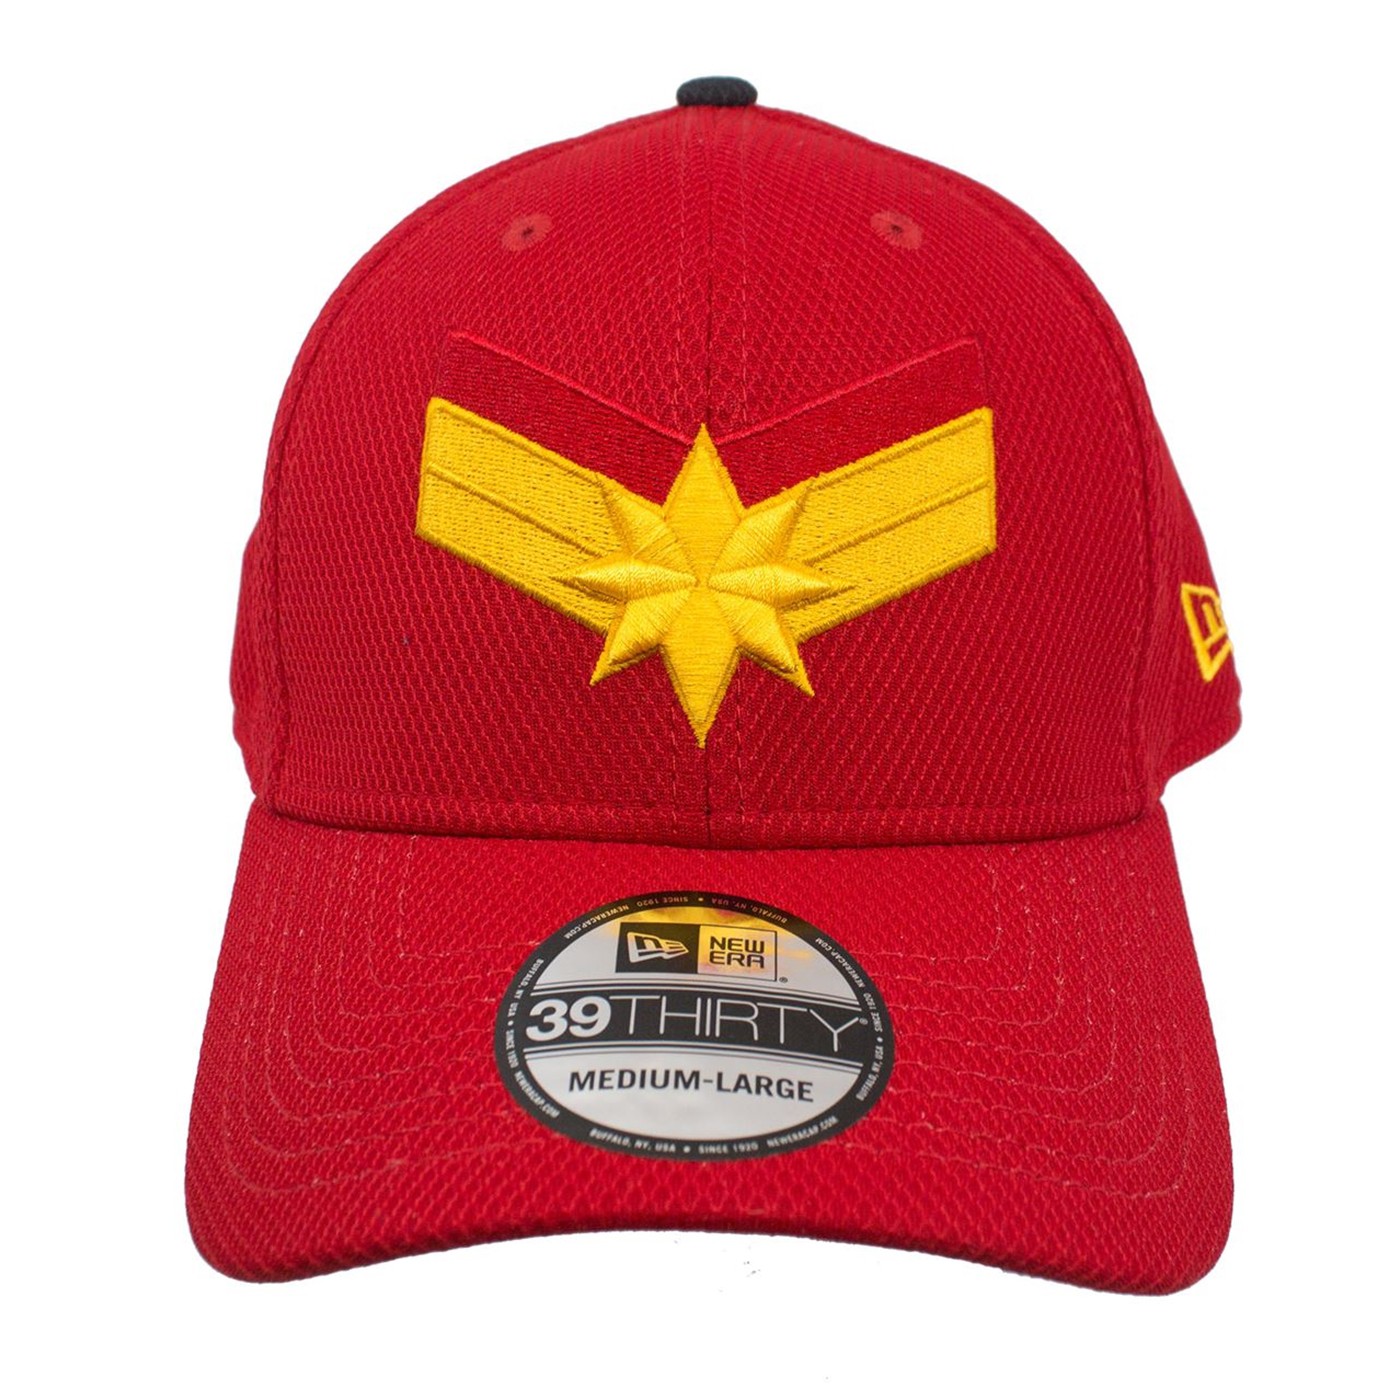 Captain Marvel Scarlet Red New Era 39Thirty Flex Fit Hat